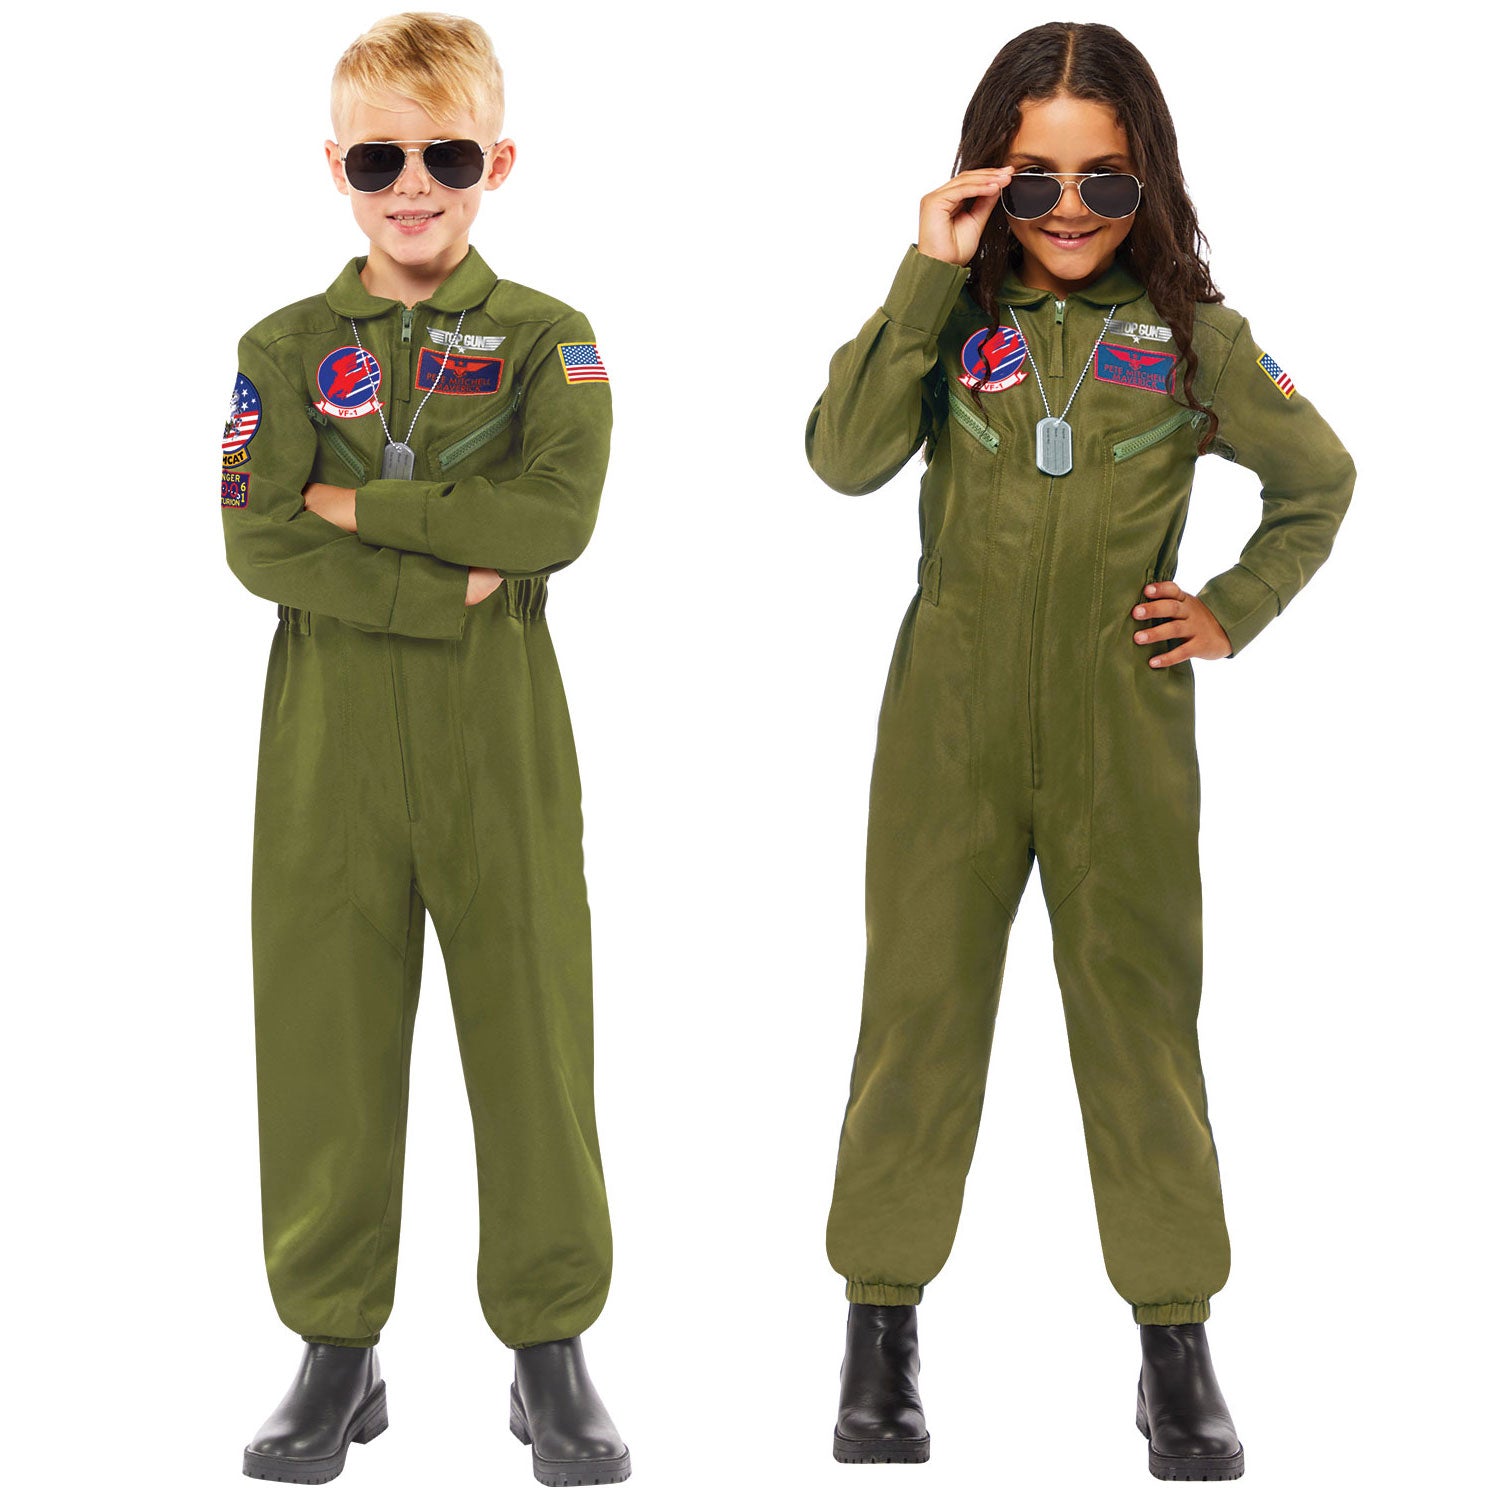 Child Top Gun Maverick Costume